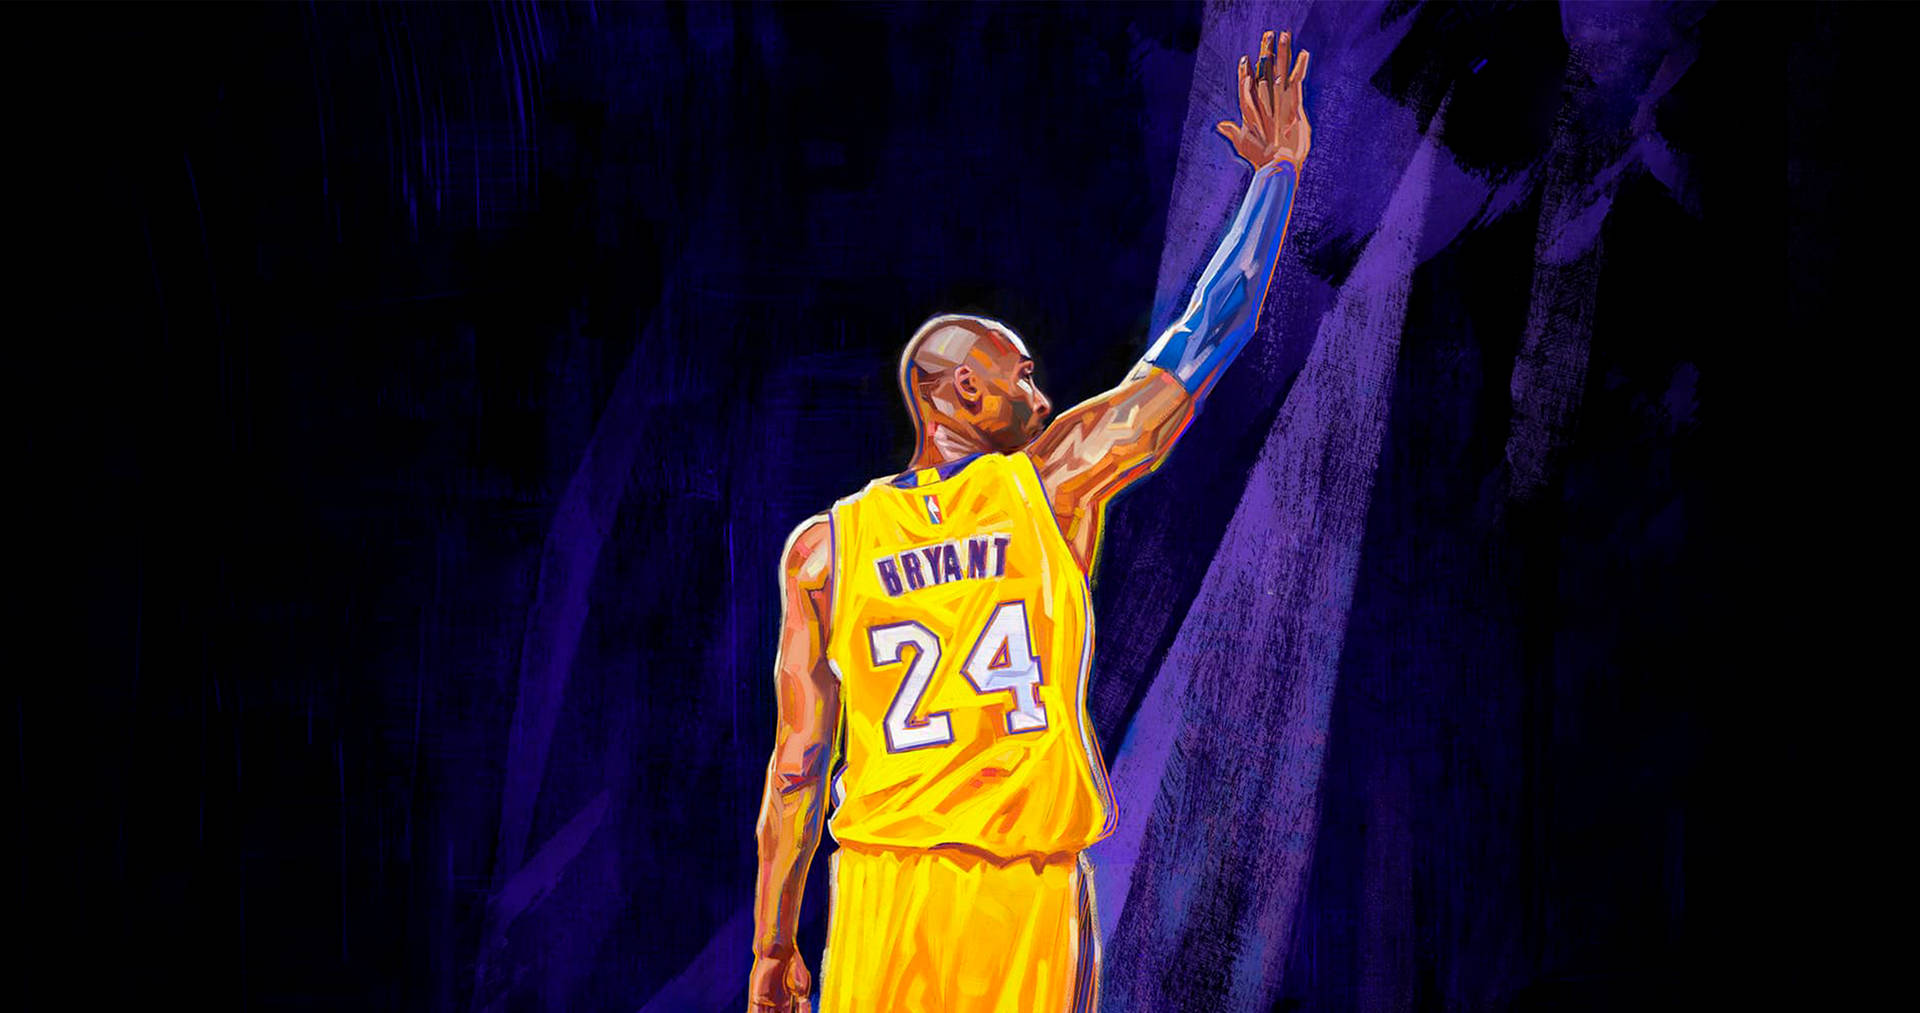 Free Kobe Bryant Cool Wallpaper Downloads, [100+] Kobe Bryant Cool  Wallpapers for FREE 